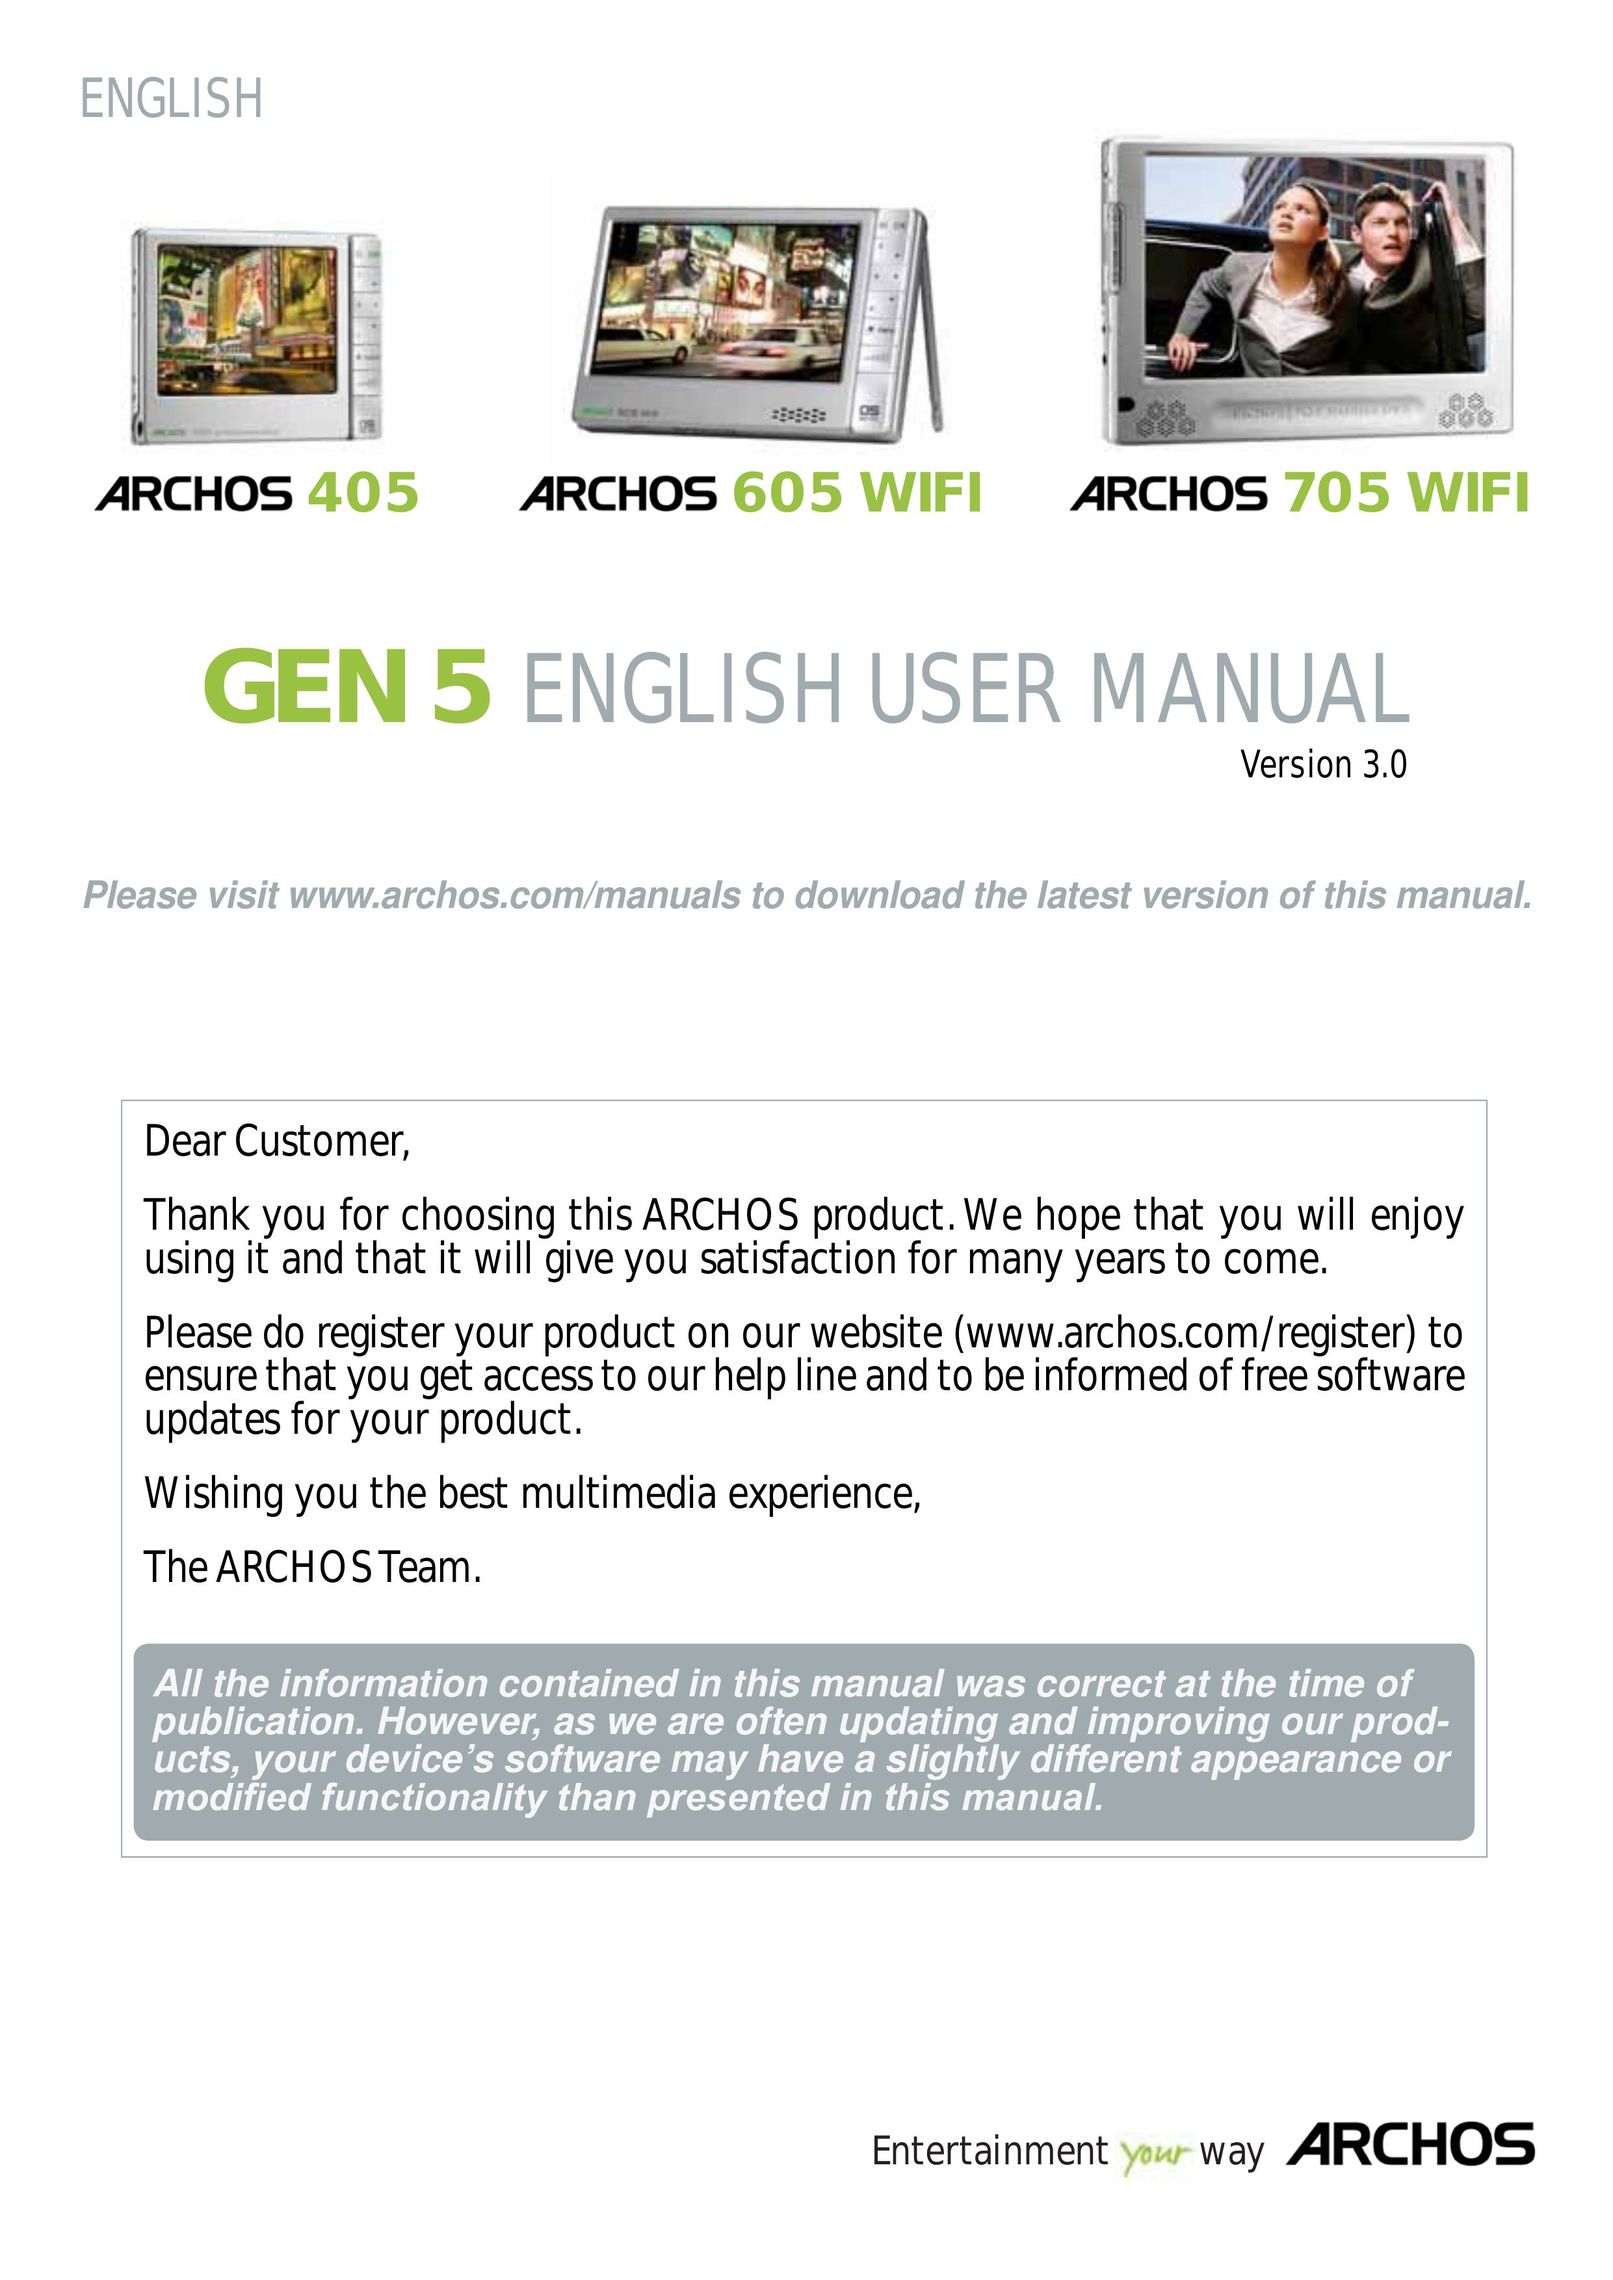 Archos 705 WIFI Portable Multimedia Player User Manual